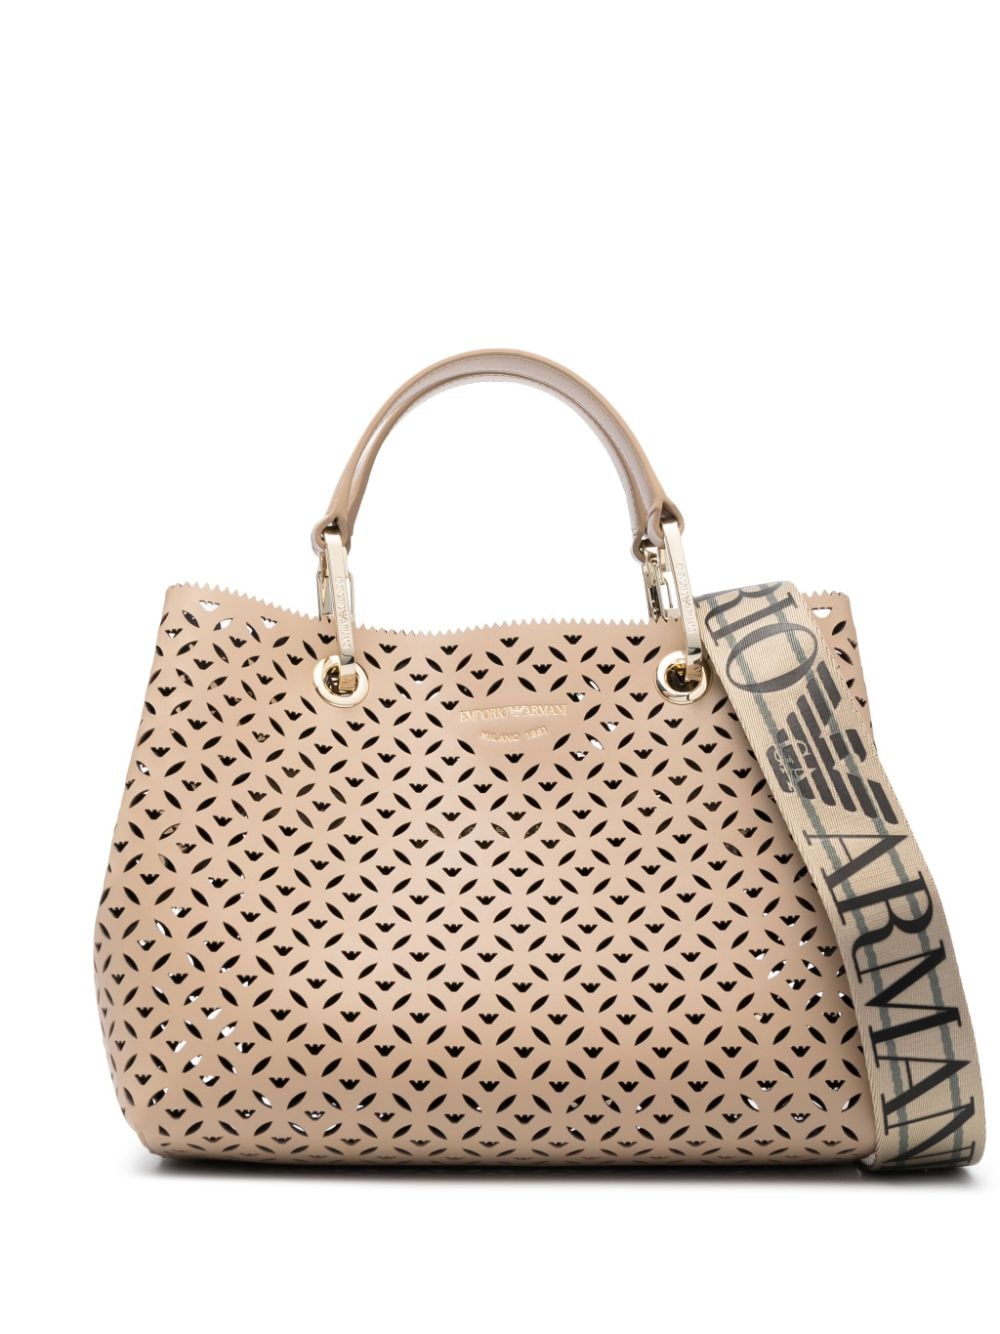 Emporio Armani Tote bags & Shoppers for Women sale - discounted price |  FASHIOLA.in